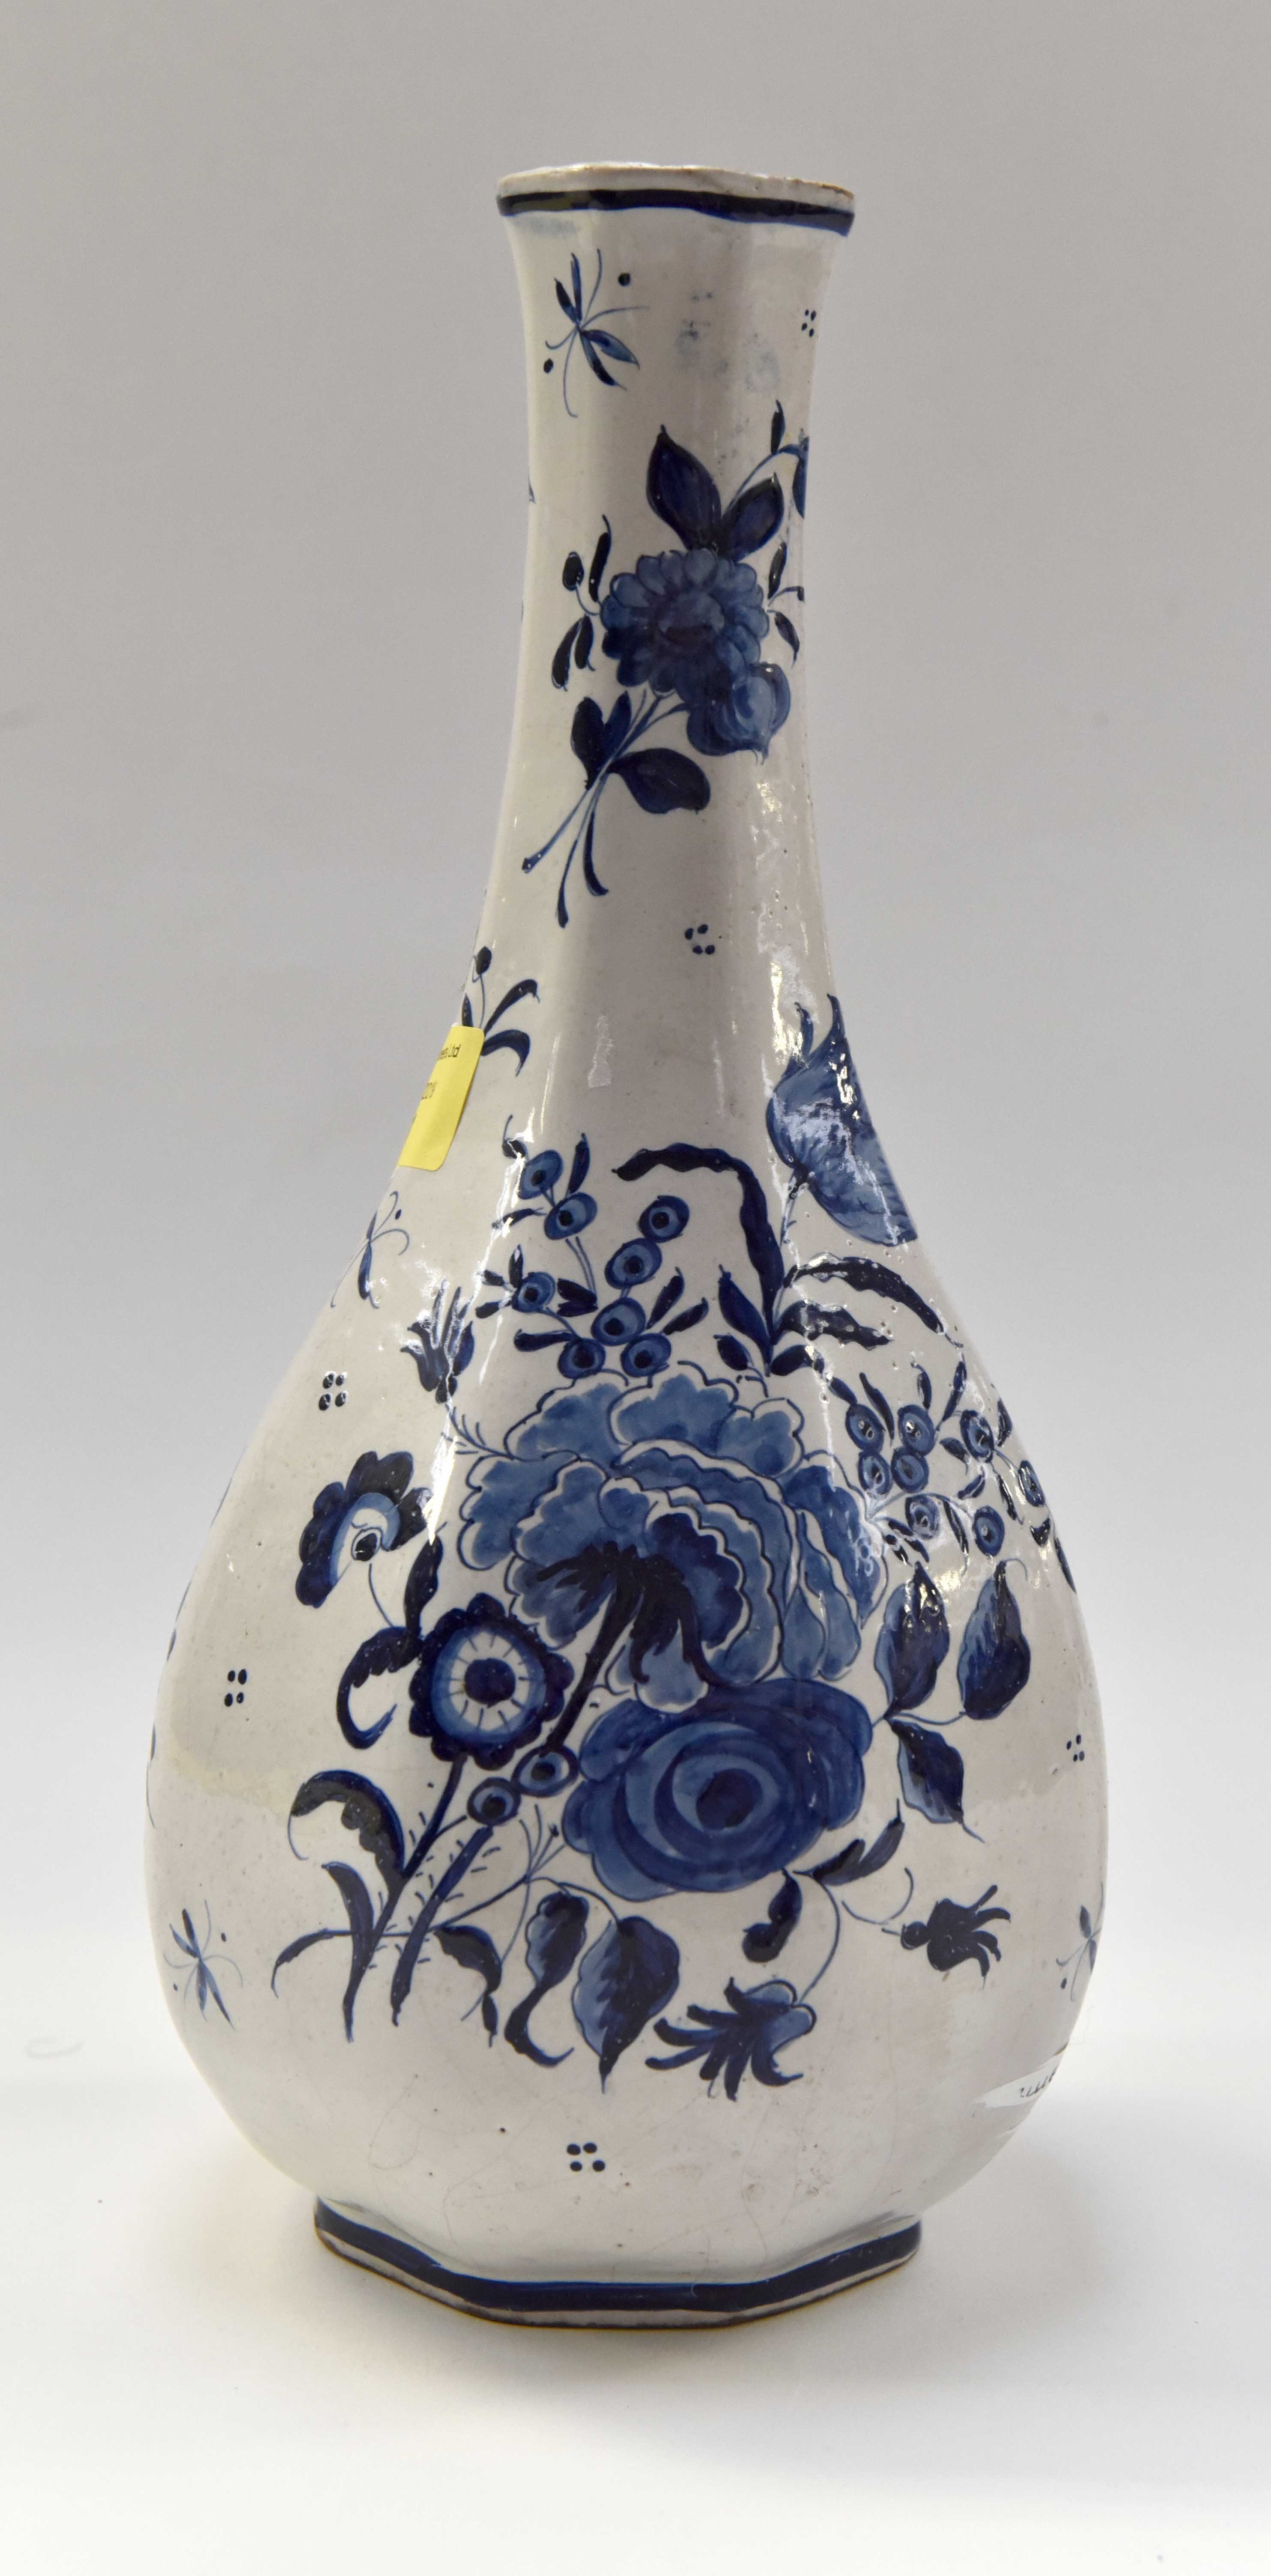 An 18th Century Camaieu blue French Faience vase measuring 30 cms high with blue floral overglaze